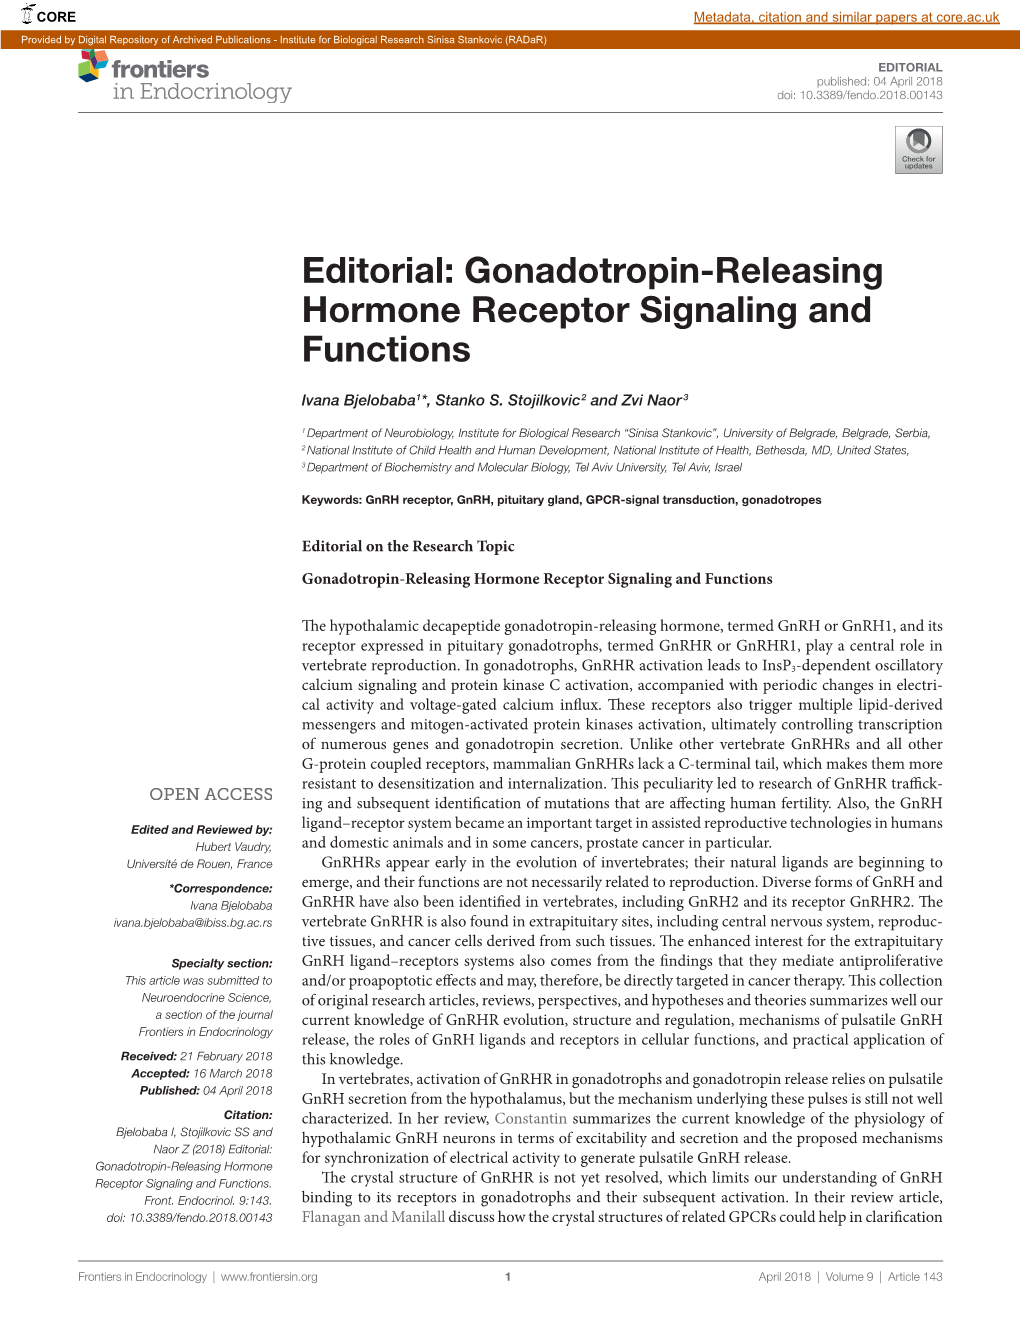 Editorial: Gonadotropin-Releasing Hormone Receptor Signaling and Functions